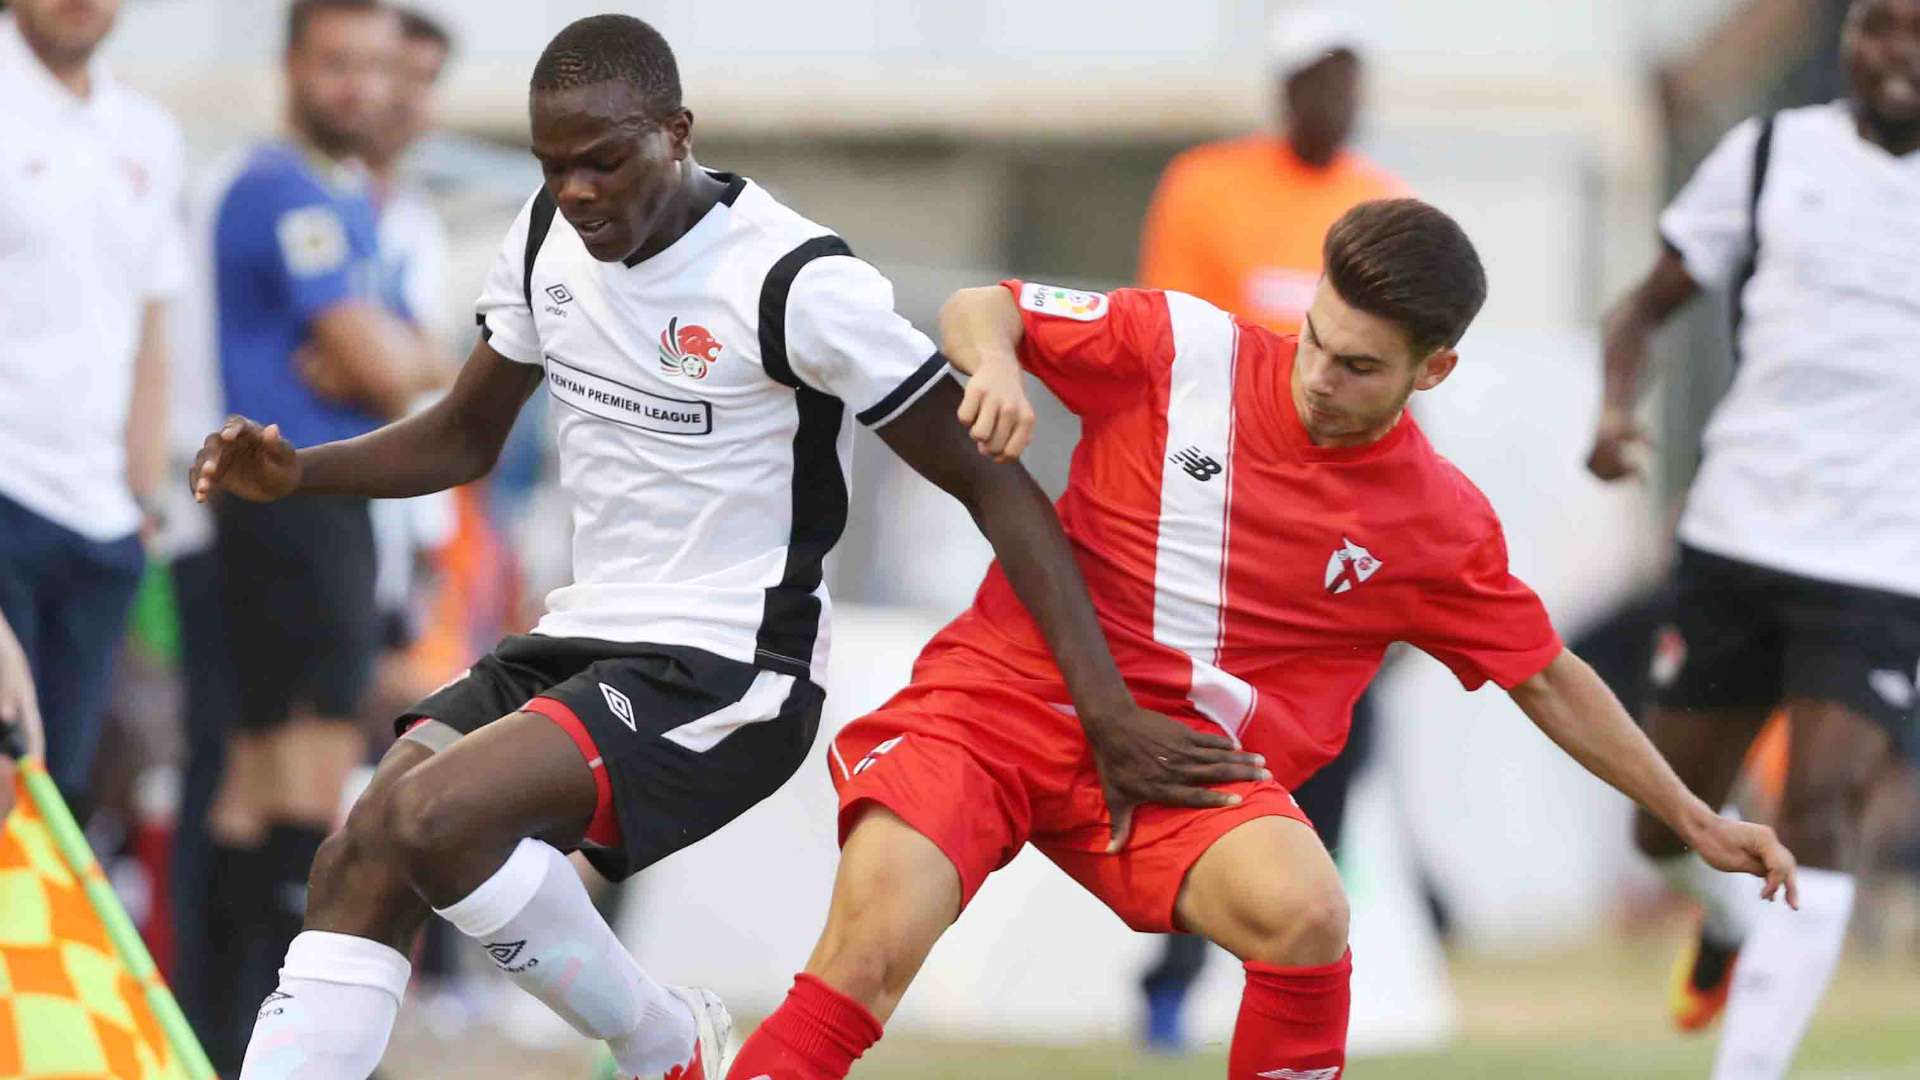 Vincent Oburu (L) tackled by Jose Alonso